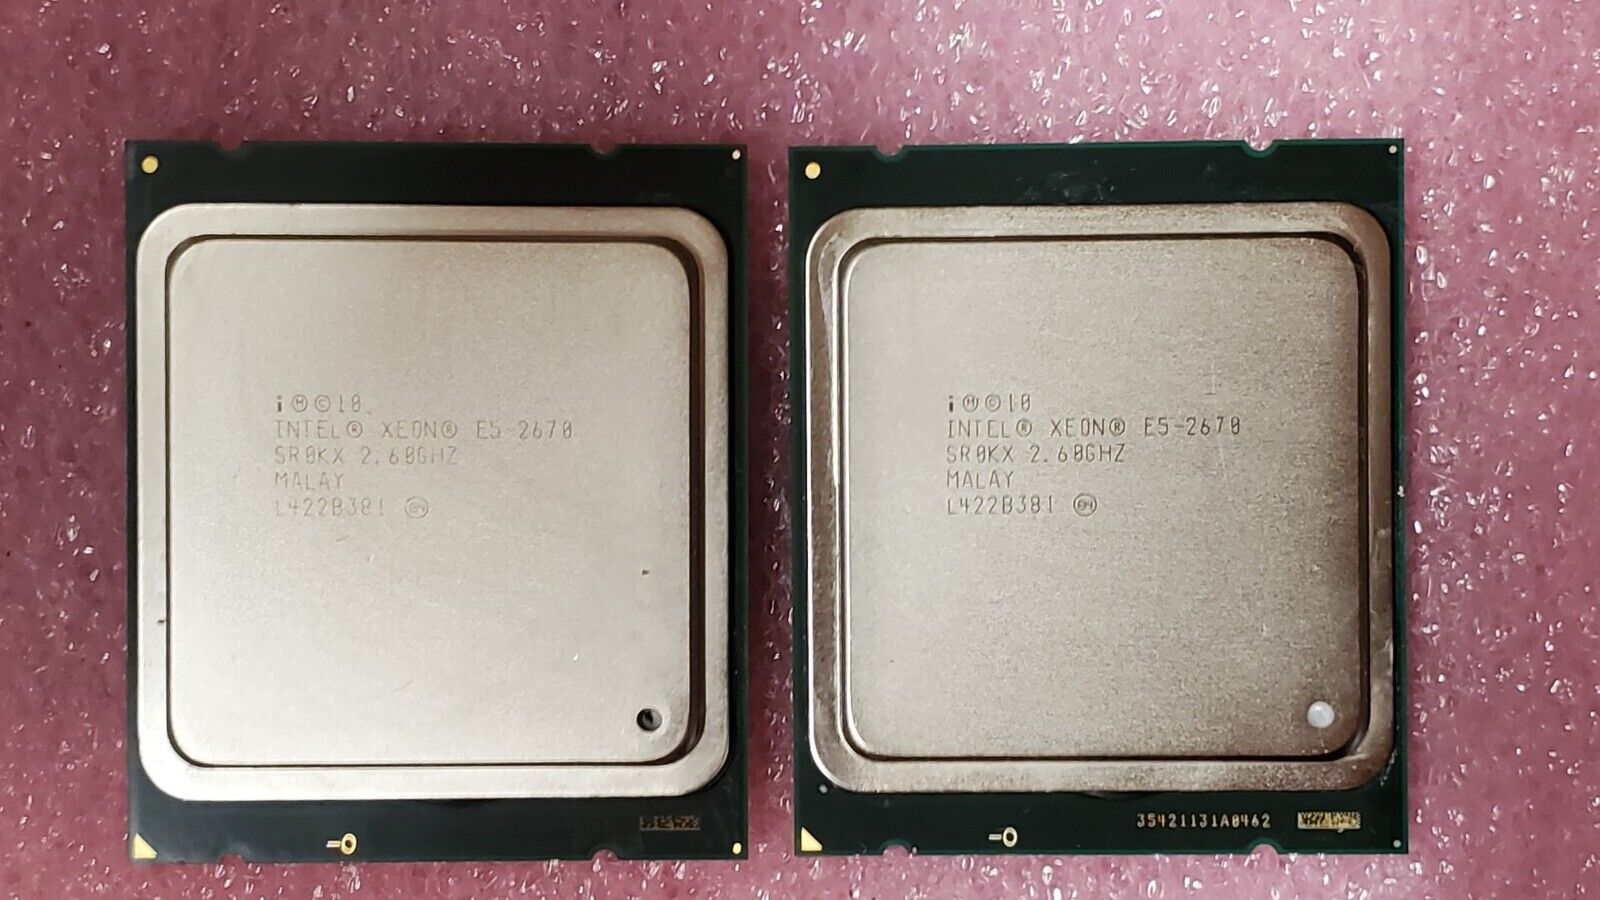 Lot of 2 (Matching Pair) Intel Xeon E5-2670 2.60GHz Processor SR0KX